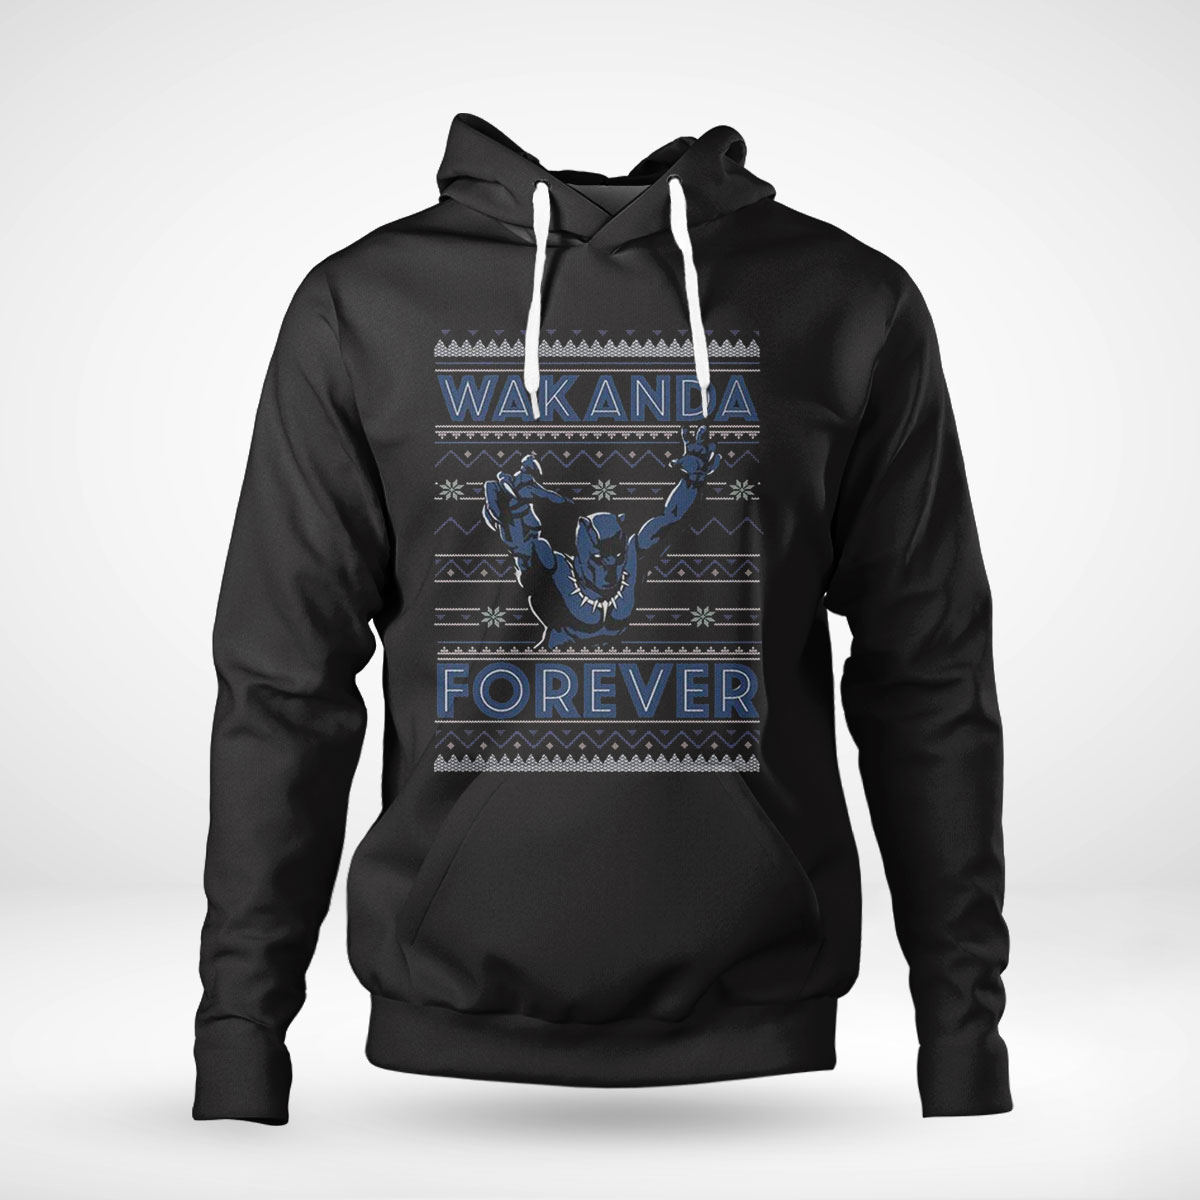 FREE shipping Wakanda Forever black lives matter shirt, Unisex tee